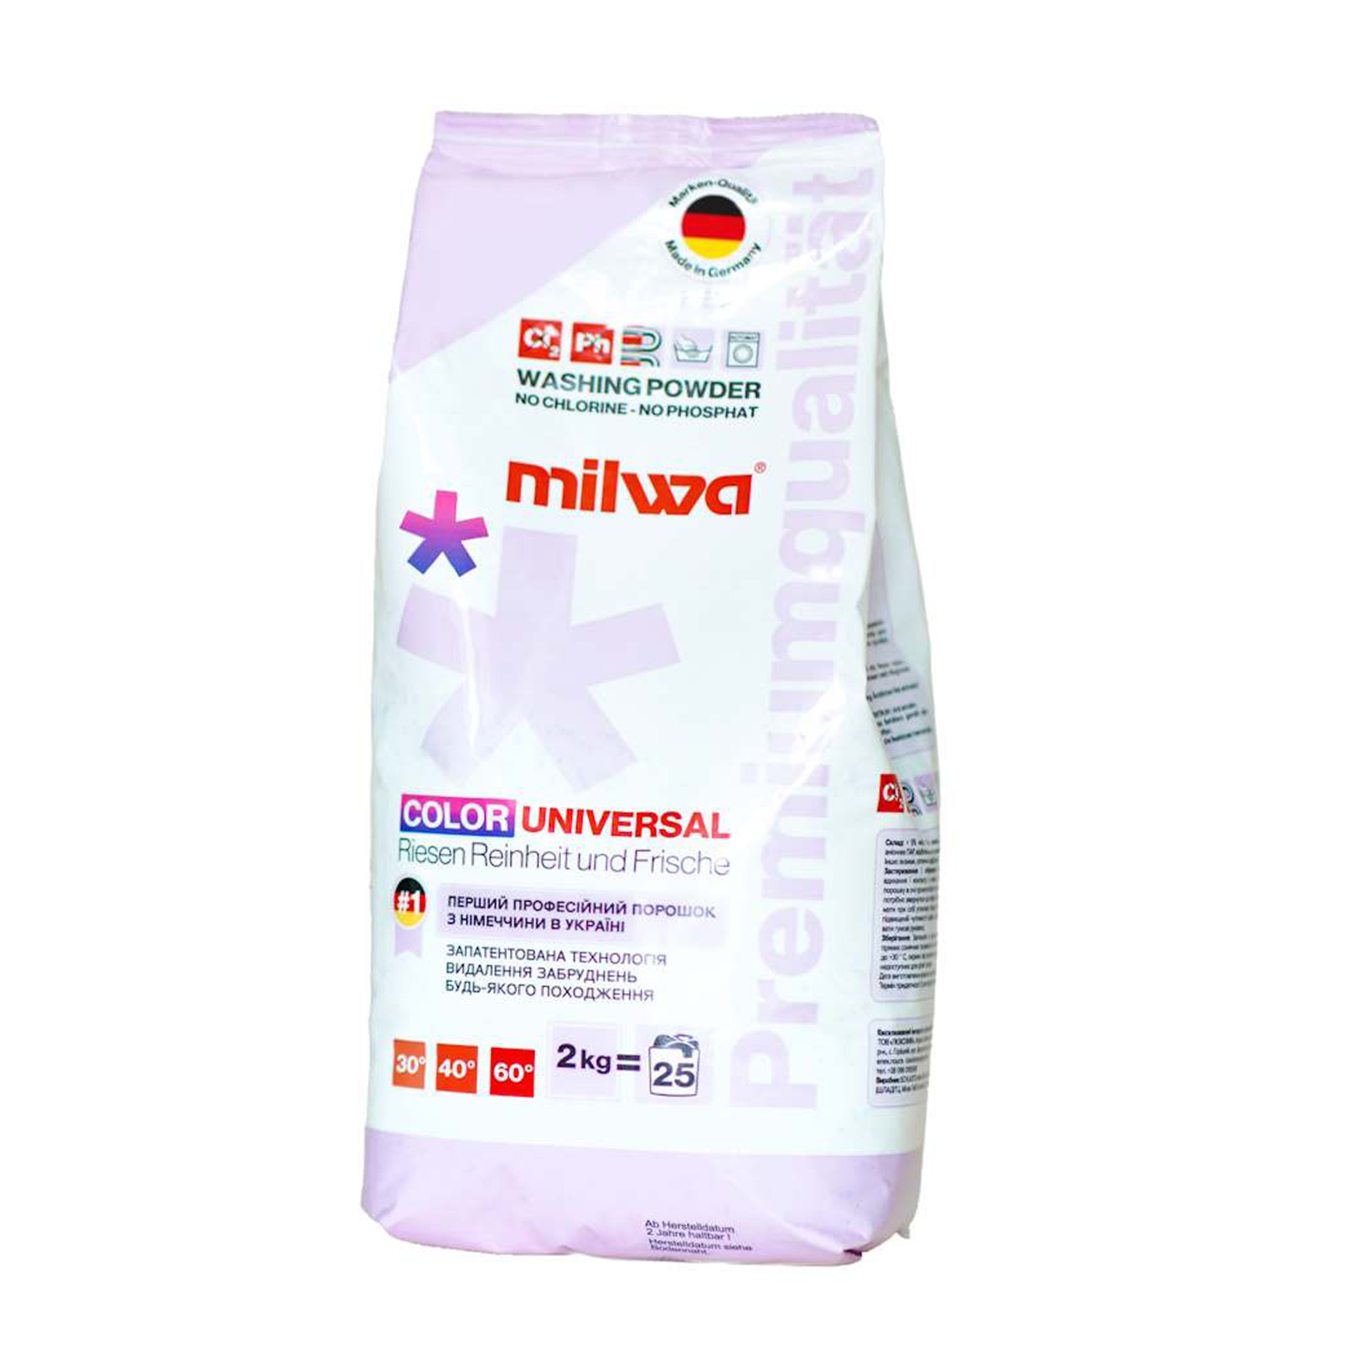 Powder Milwa Color Universal for washing 2 kg